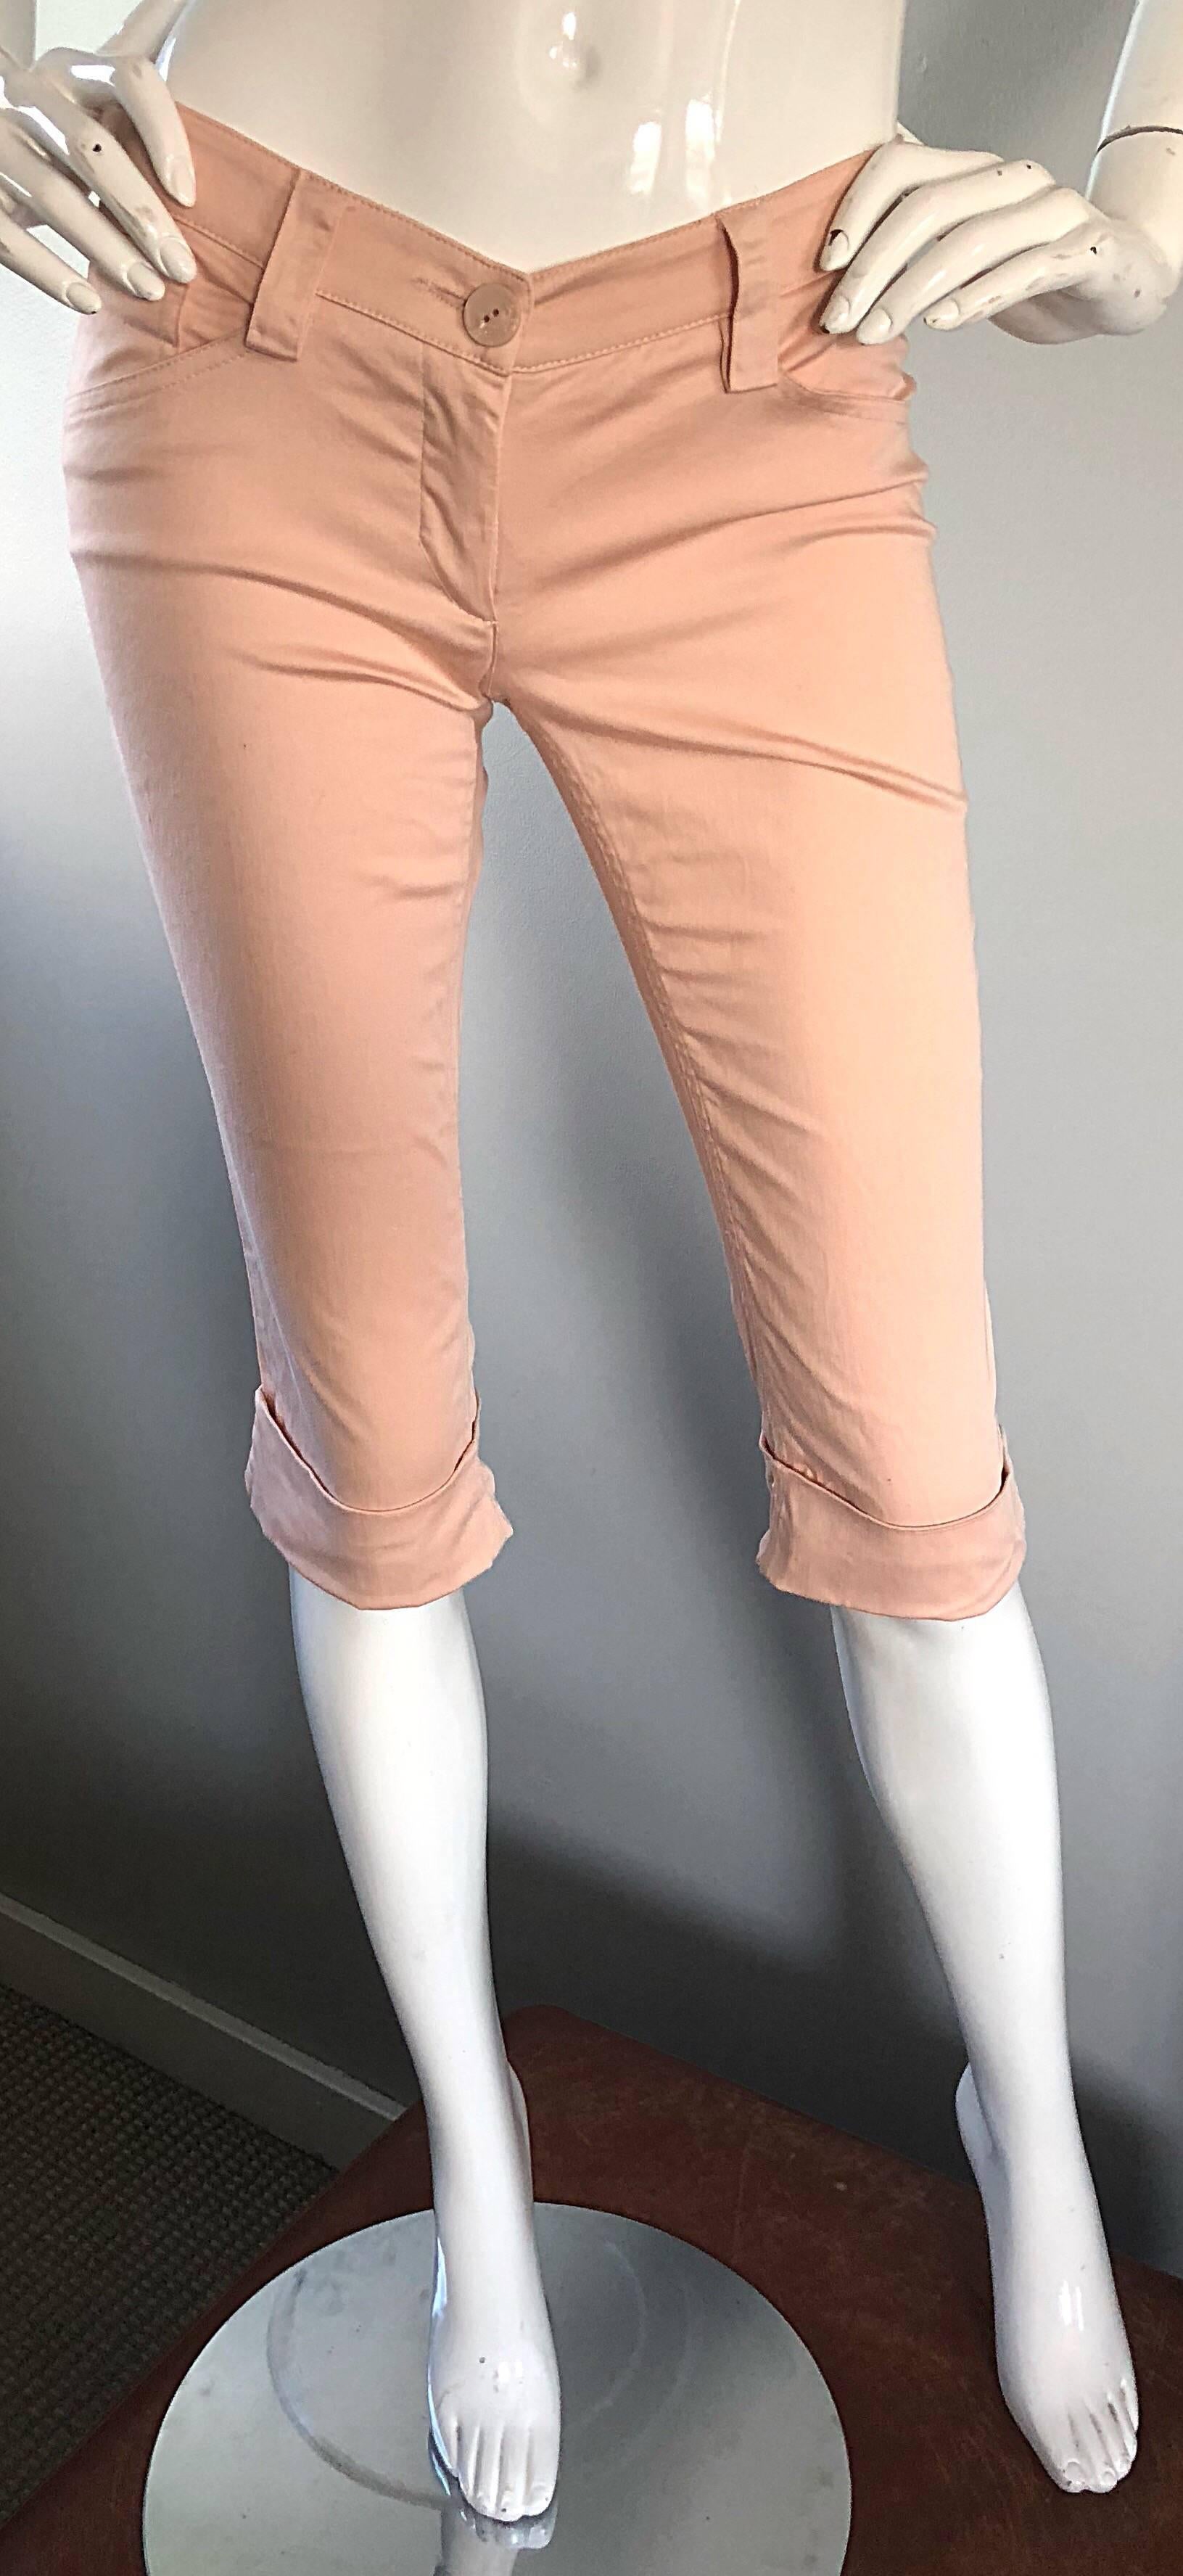 Women's 1990s Alexander McQueen Light Pink Rhinestone Studded Rare Capri Pants Shorts